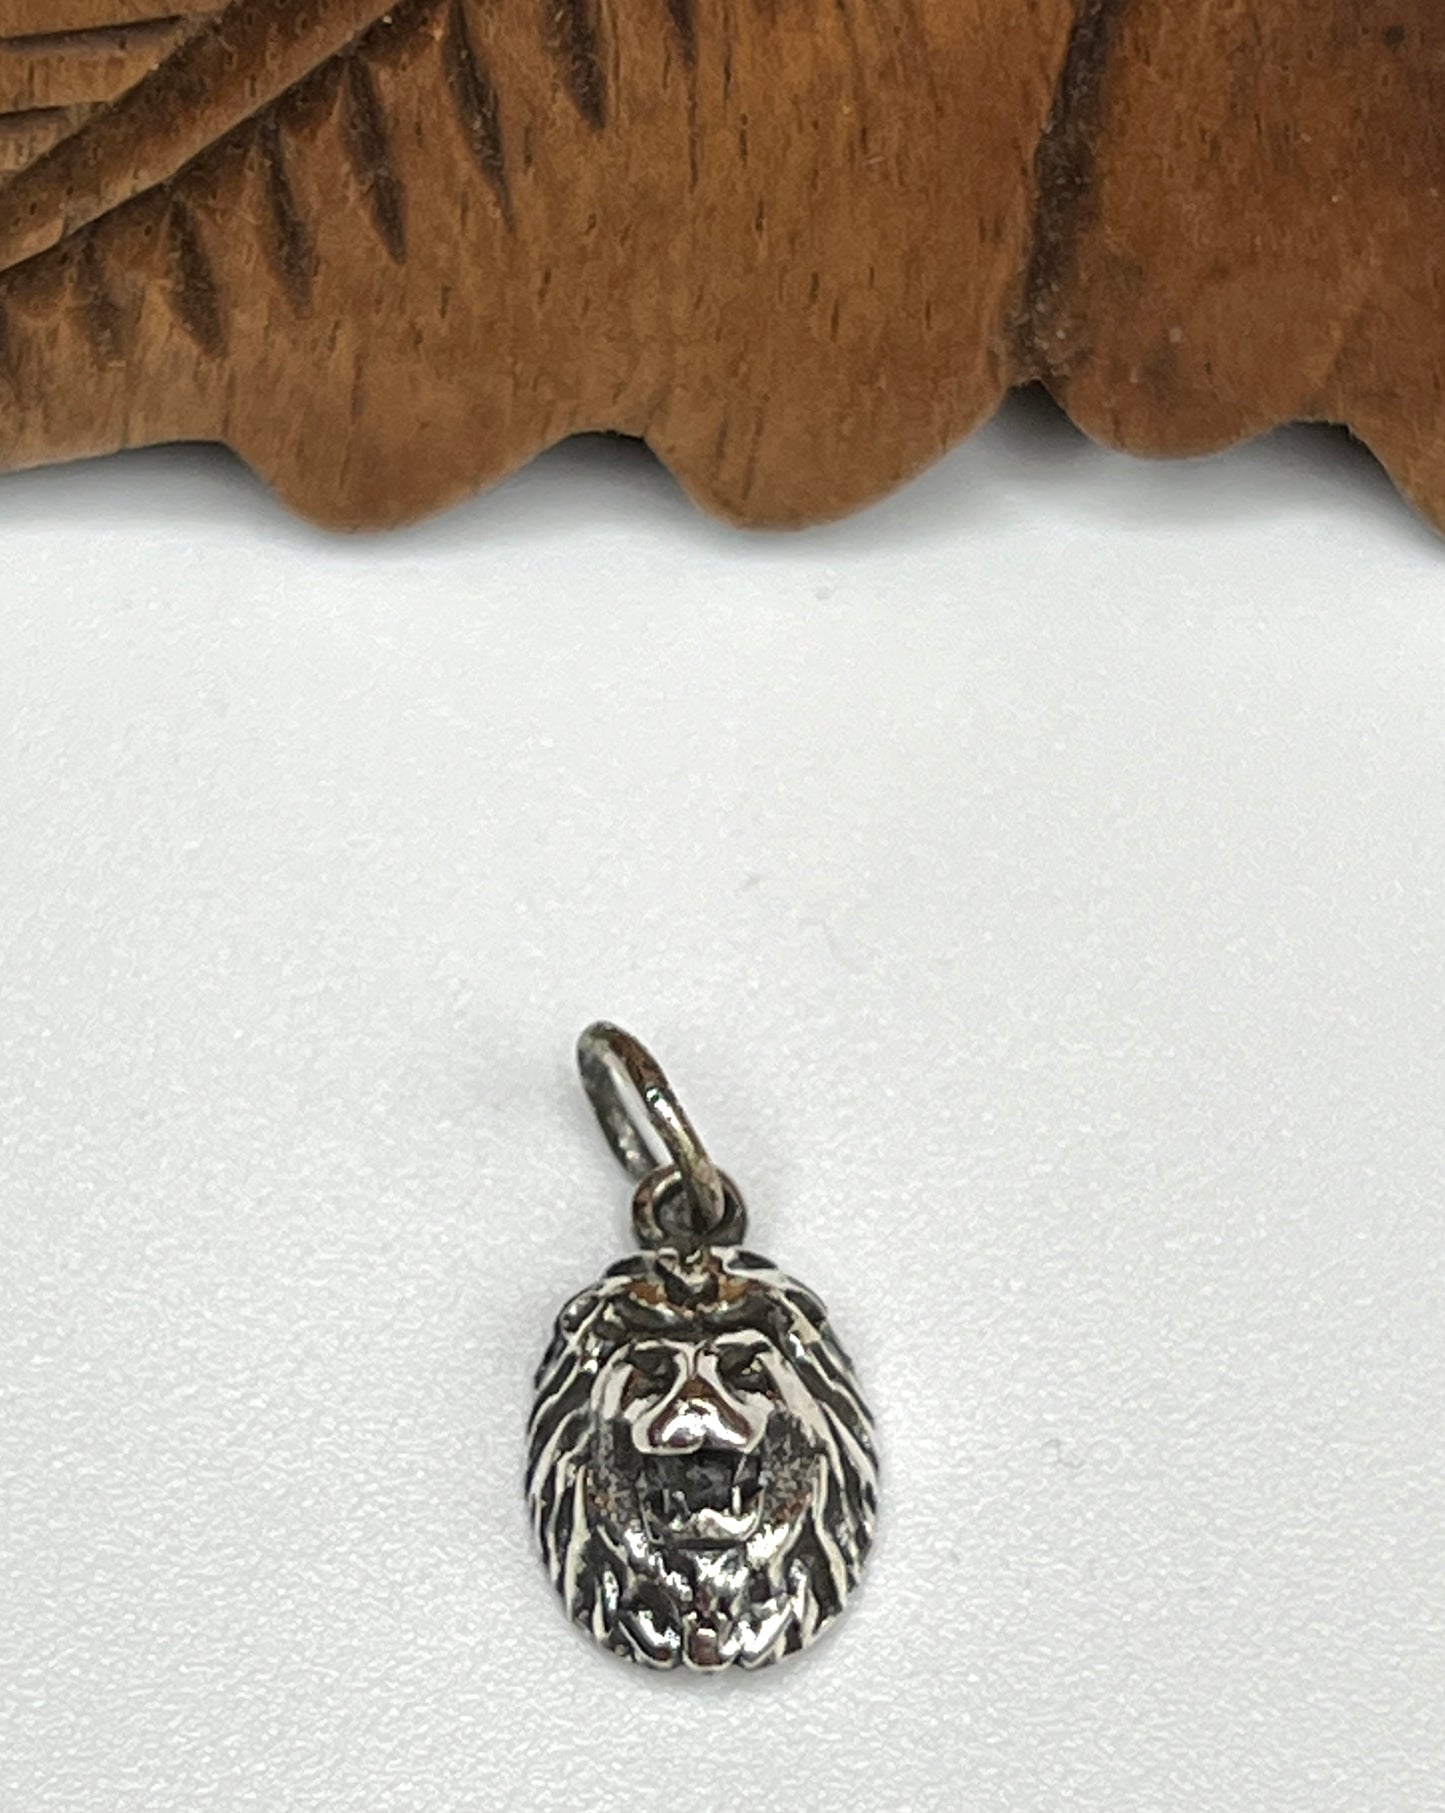 Sterling Silver Lion Pendants